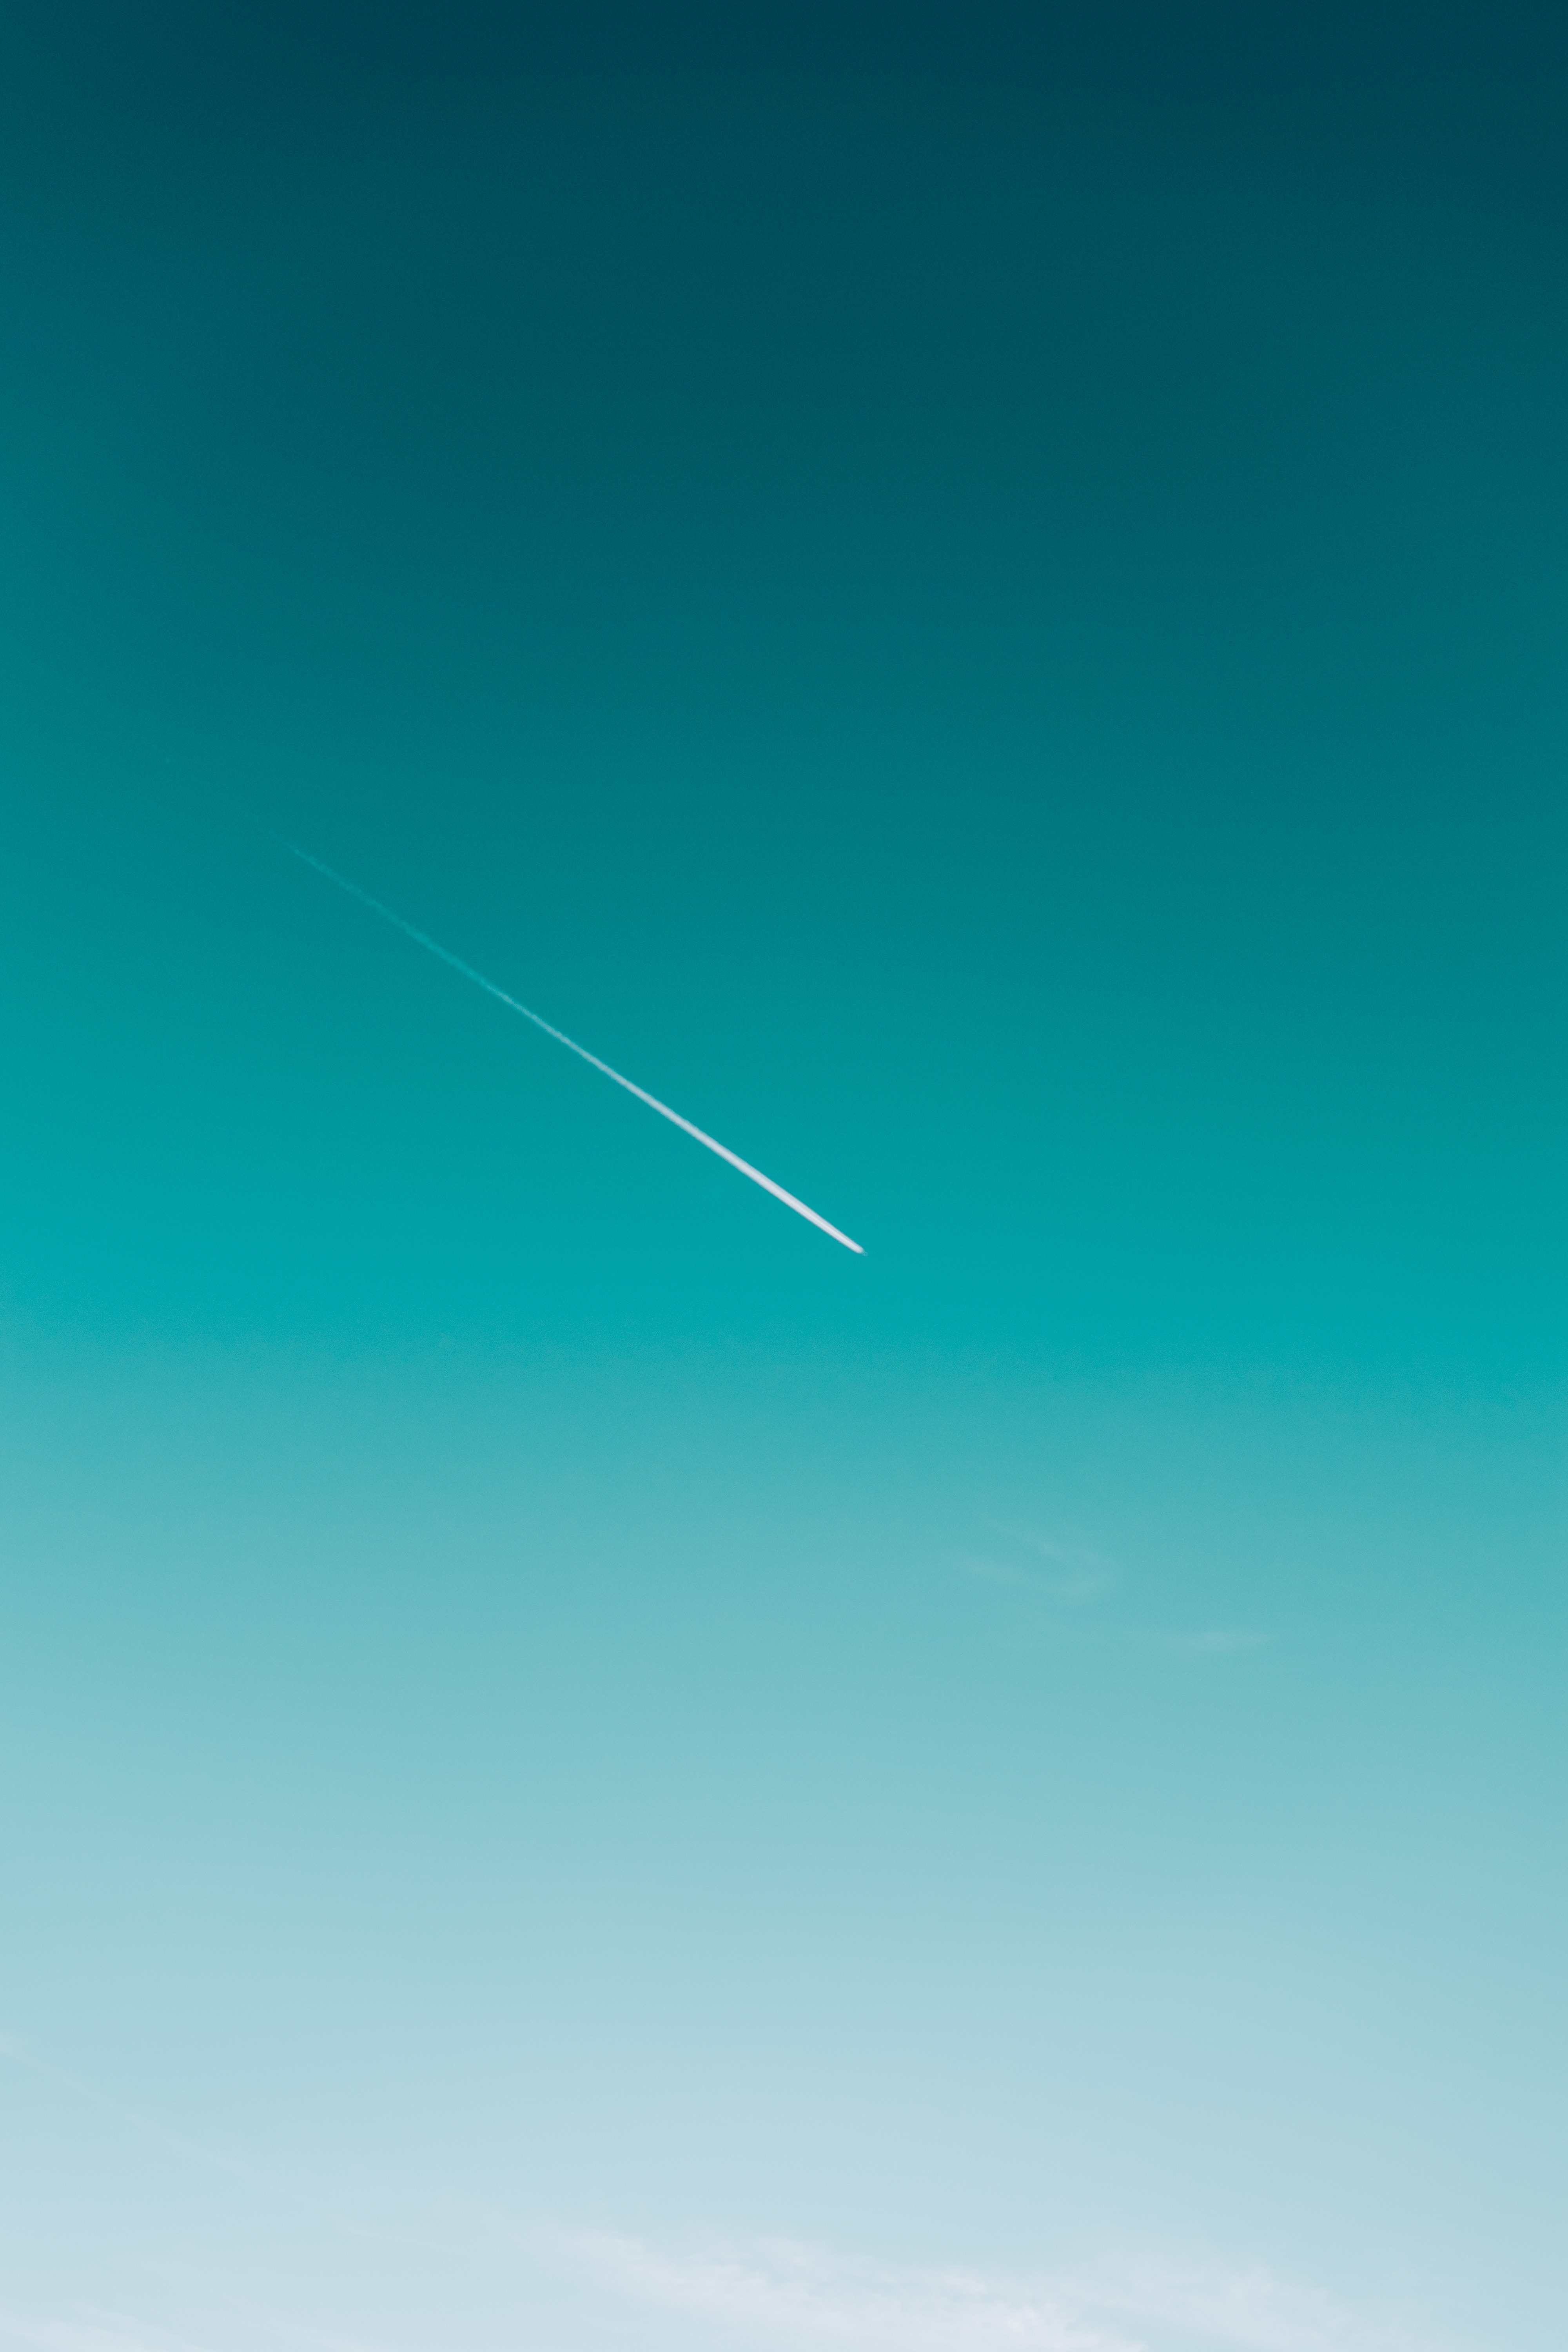 minimalism, sky, plane, airplane, track, trace